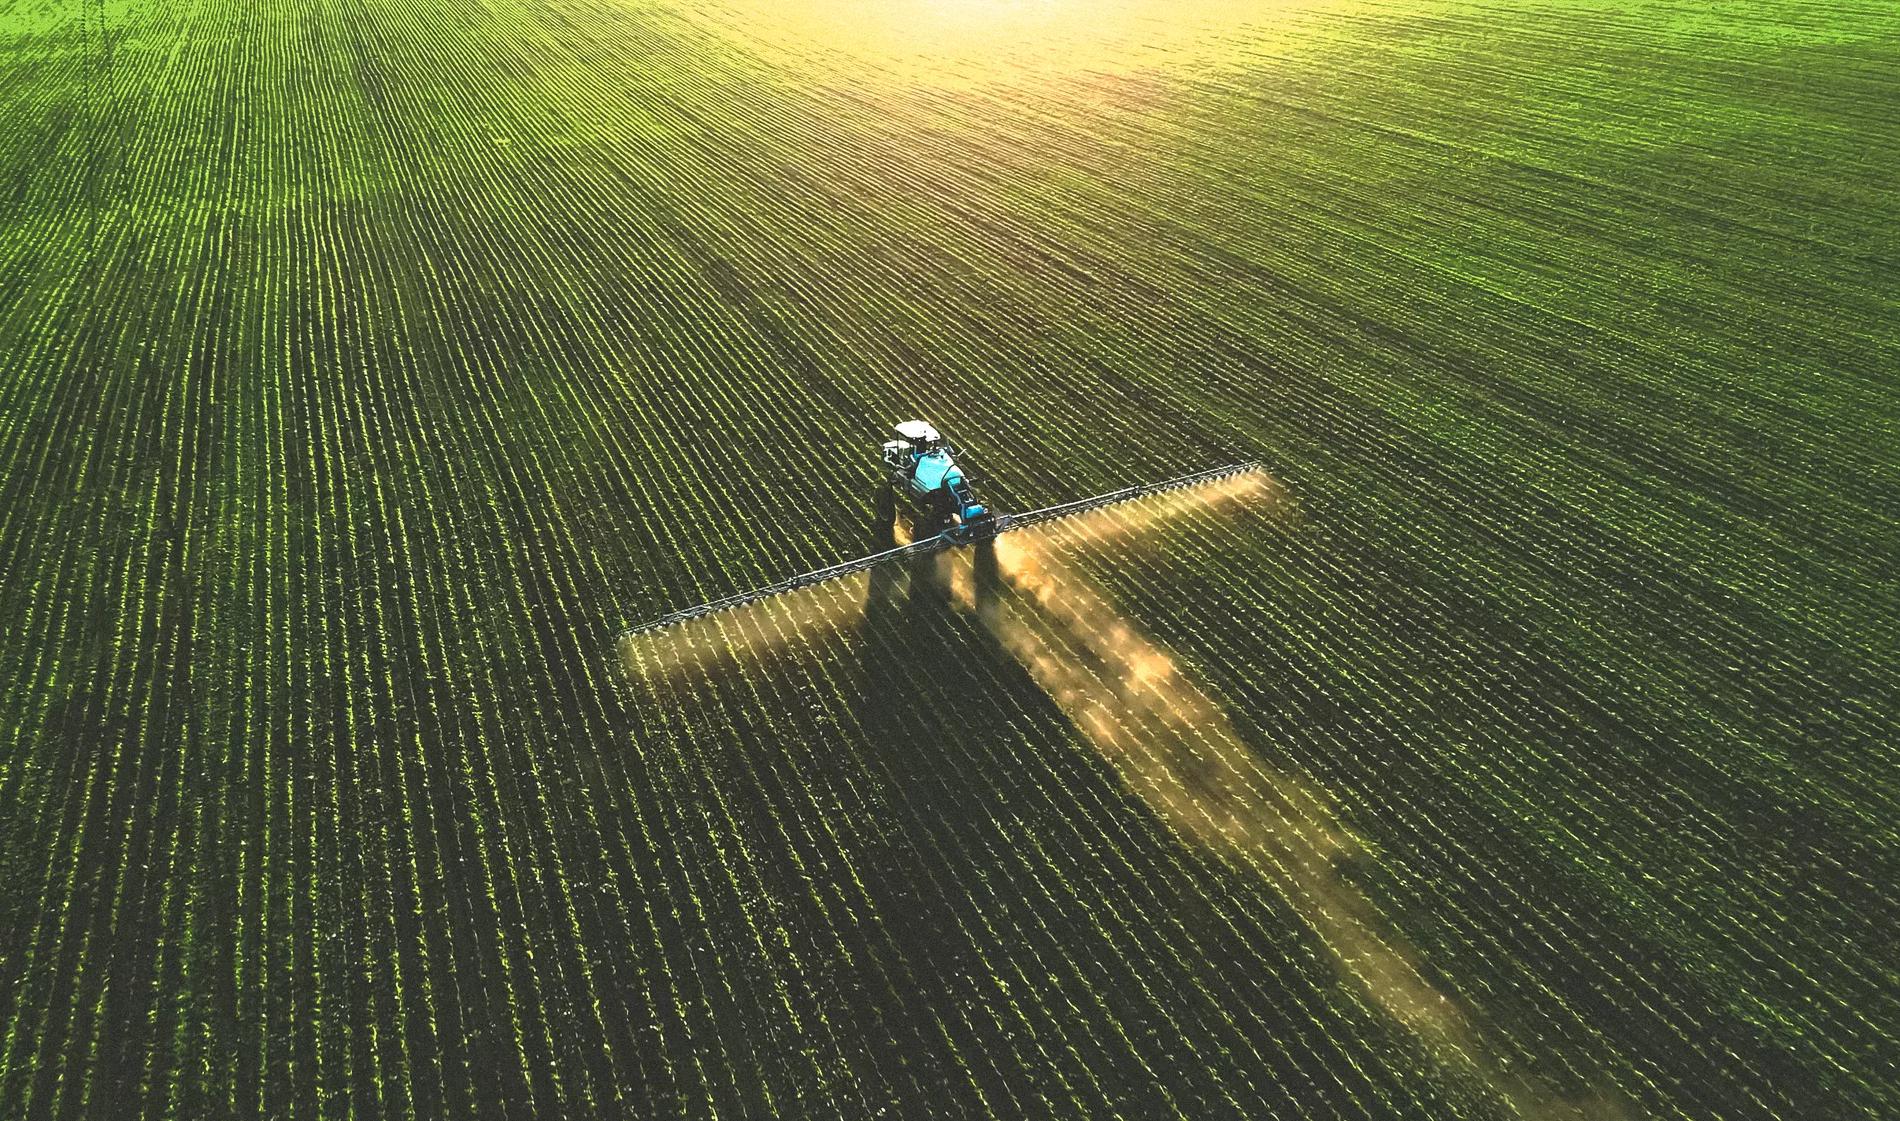 Tractor spraying fertilizer on a green field.